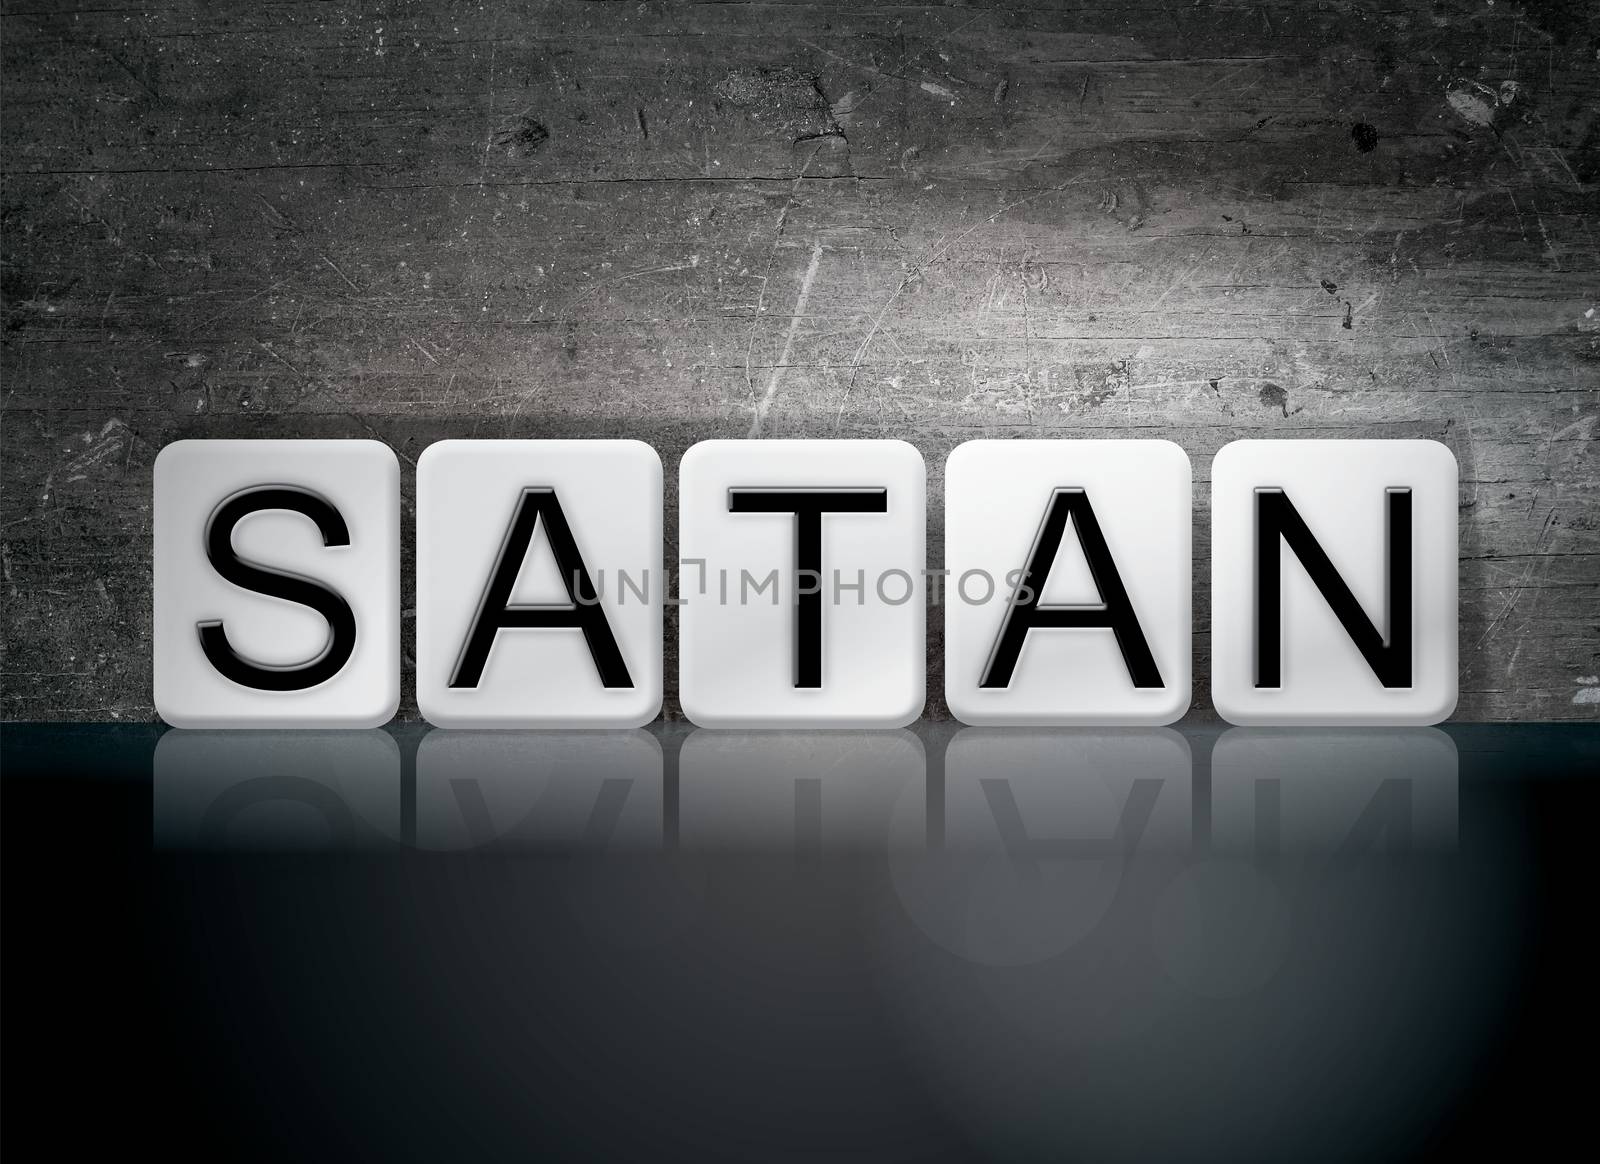 The word "Satan" written in white tiles against a dark vintage grunge background.